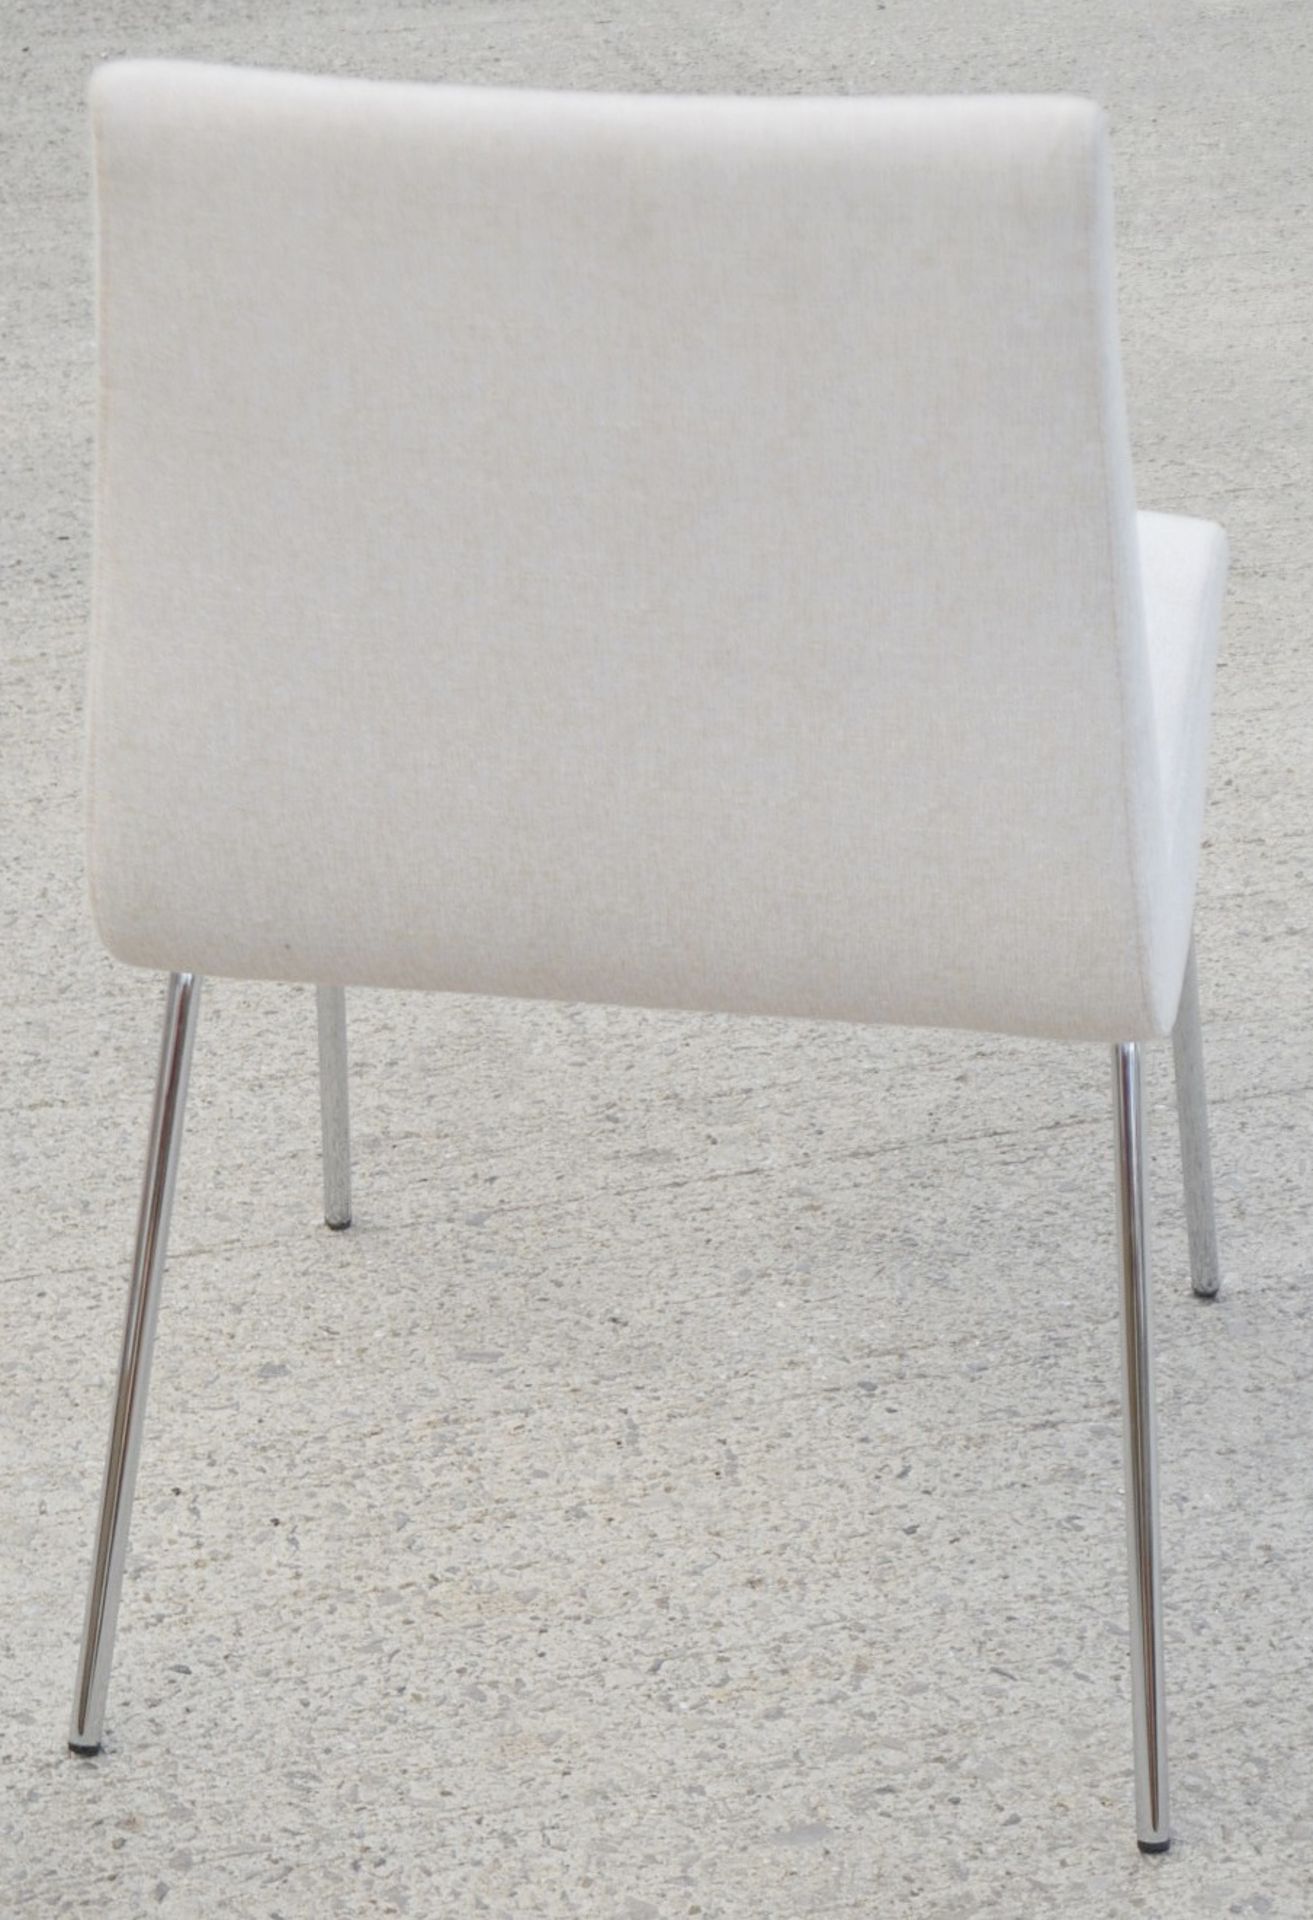 Pair Of LIGNE ROSET 'TV' Designer Dining Chairs In A Light Neutral Beige Fabric & Chromed Steel Legs - Image 3 of 9